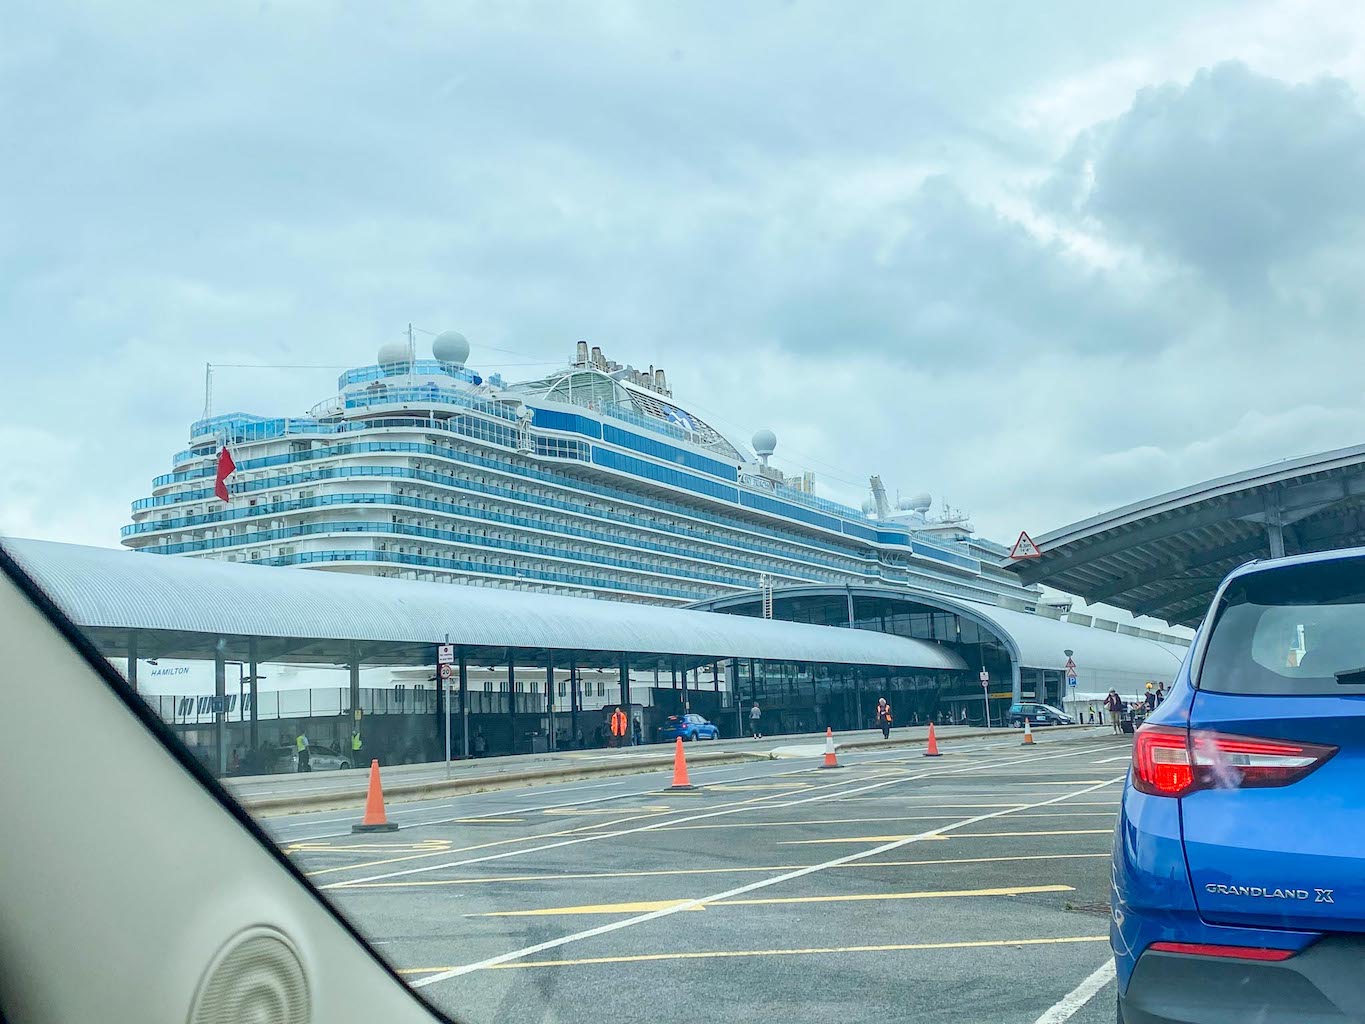 Southampton Ocean Cruise Terminal parking